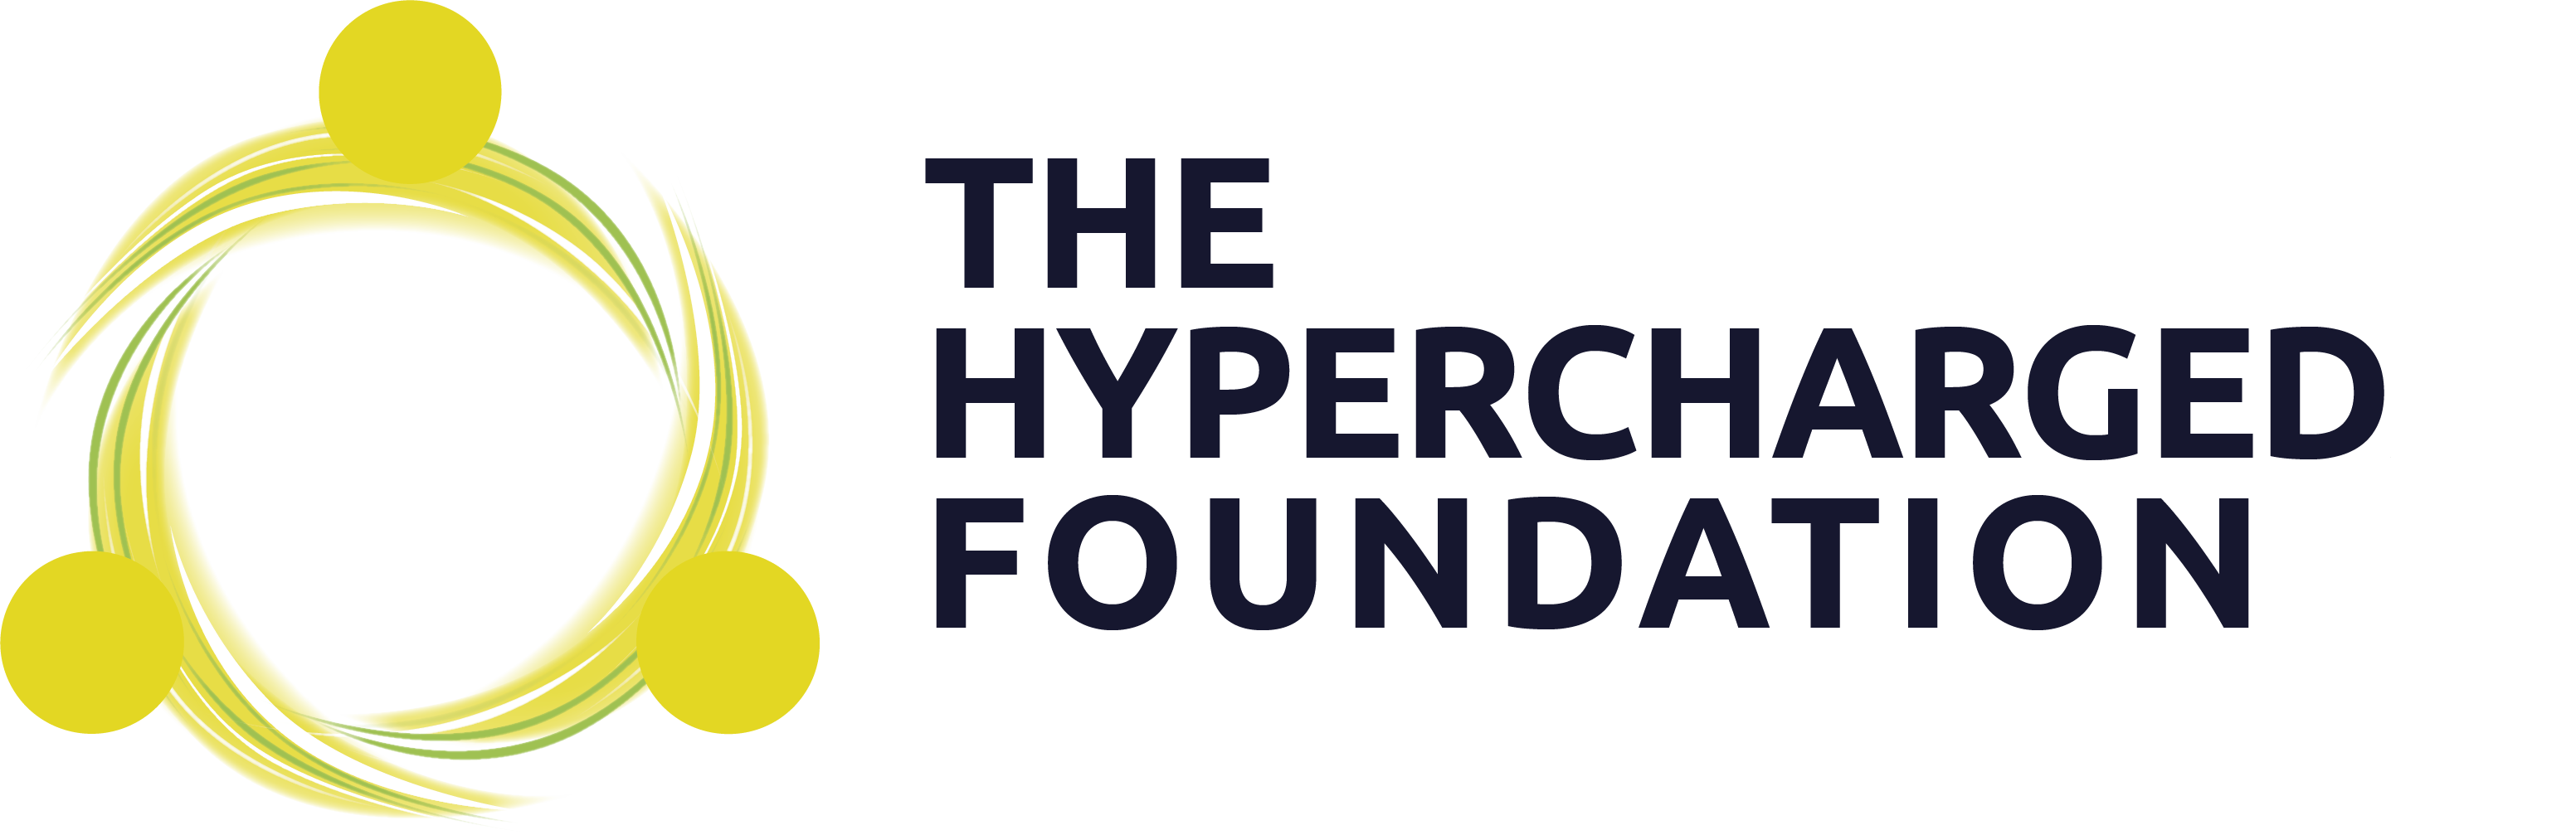 Hypercharged Foundation Logo